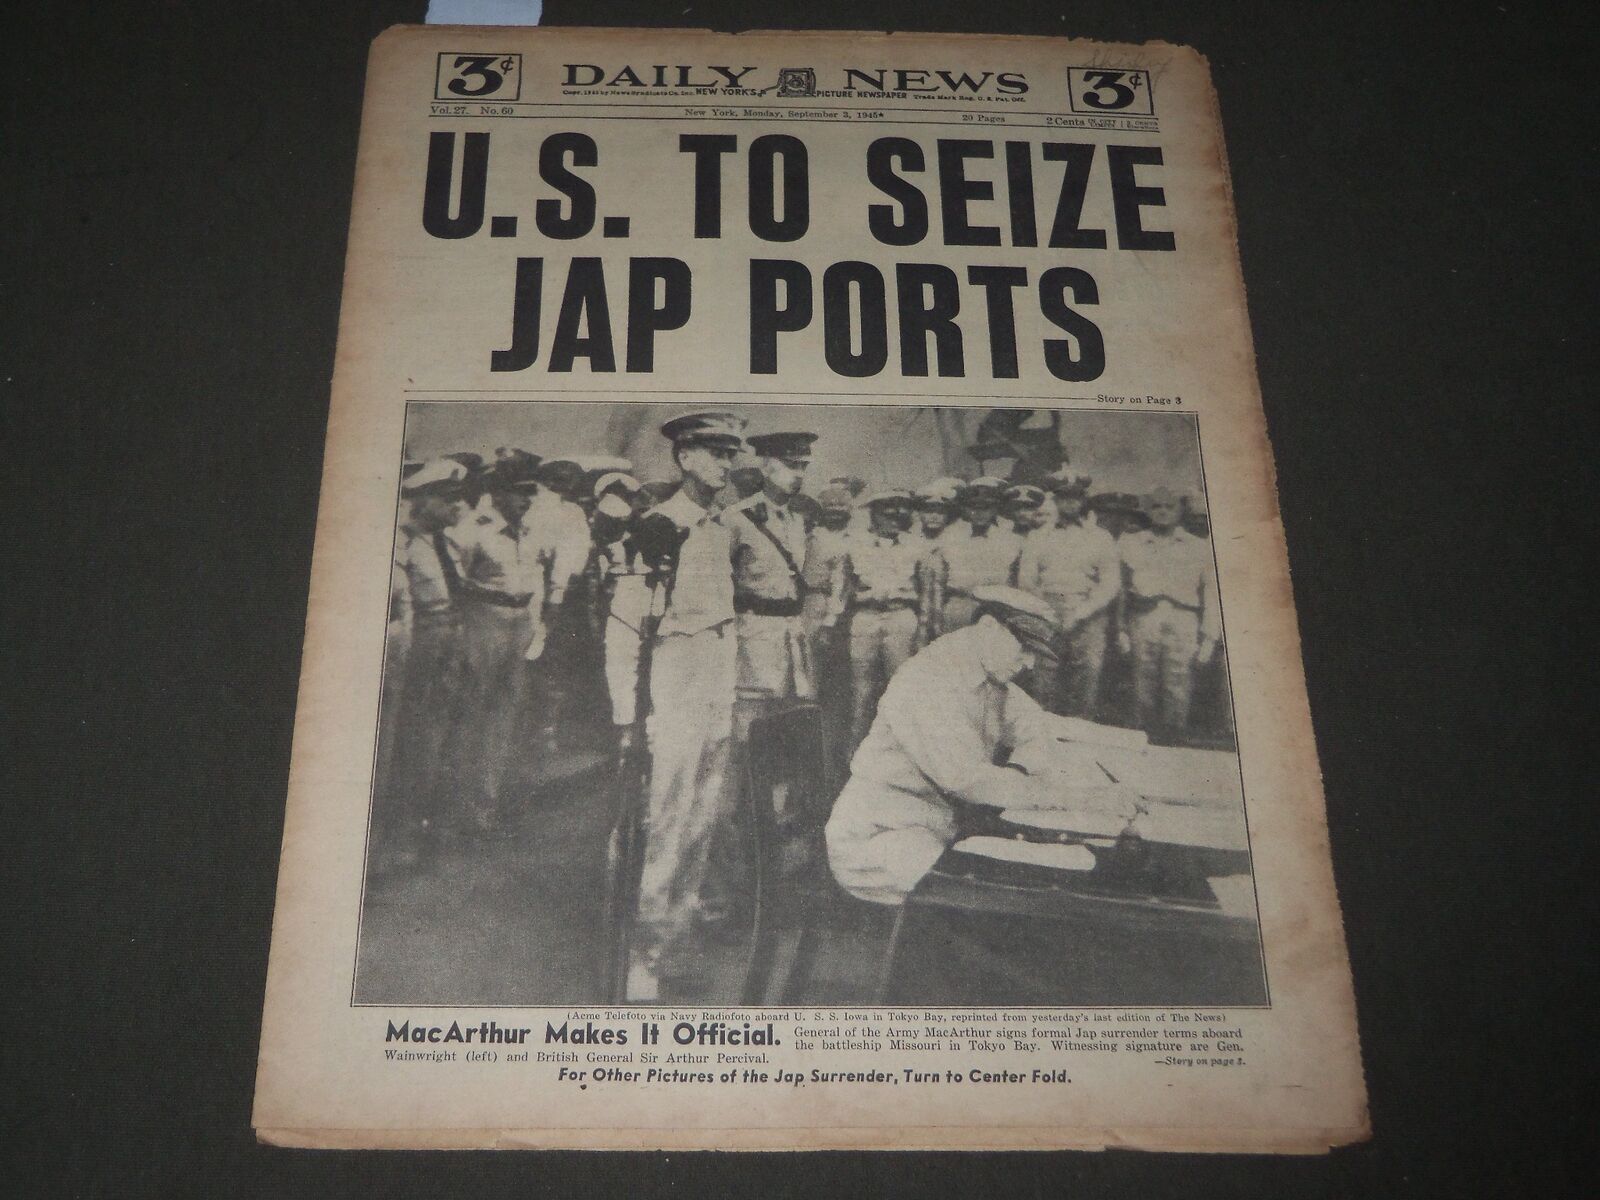 1945 SEPTEMBER 3 NEW YORK DAILY NEWS - U. S. TO SEIZE JAP PORTS - NP 2902